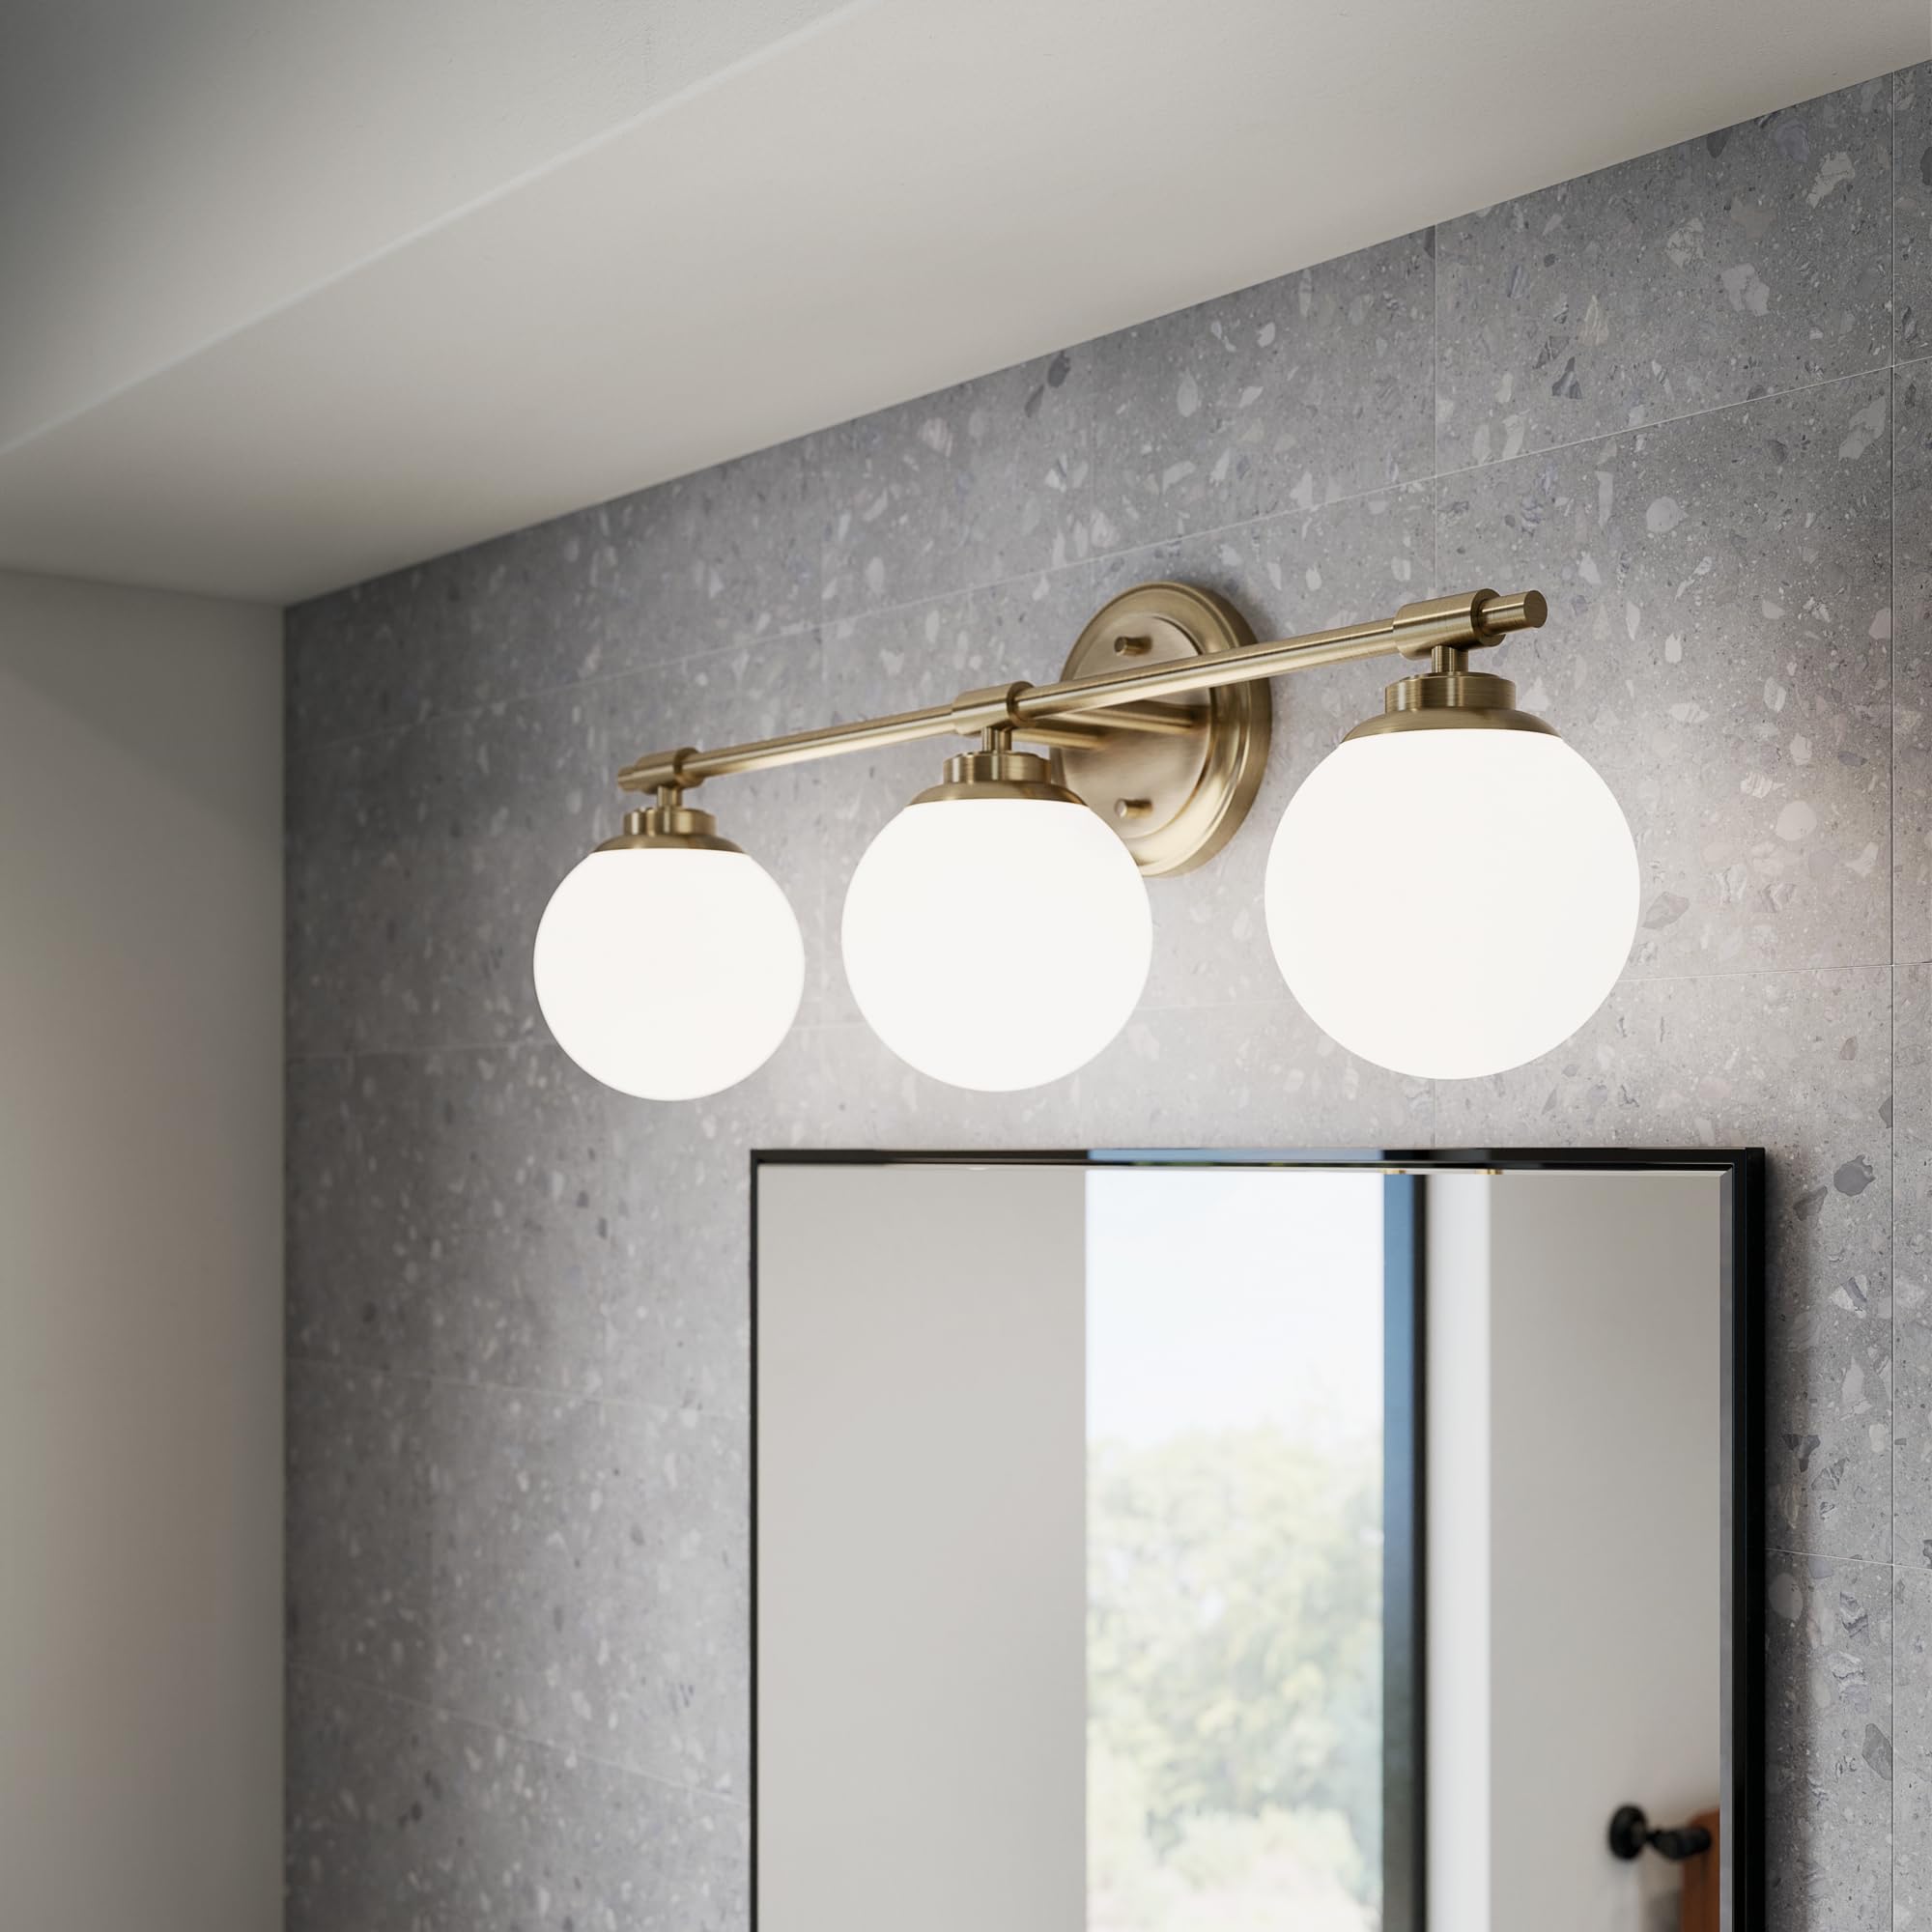 KICHLER Benno 3-Light Vanity, Modern Light with Opal Glass in Champagne Bronze, for Bathroom or Powder Room (8.75